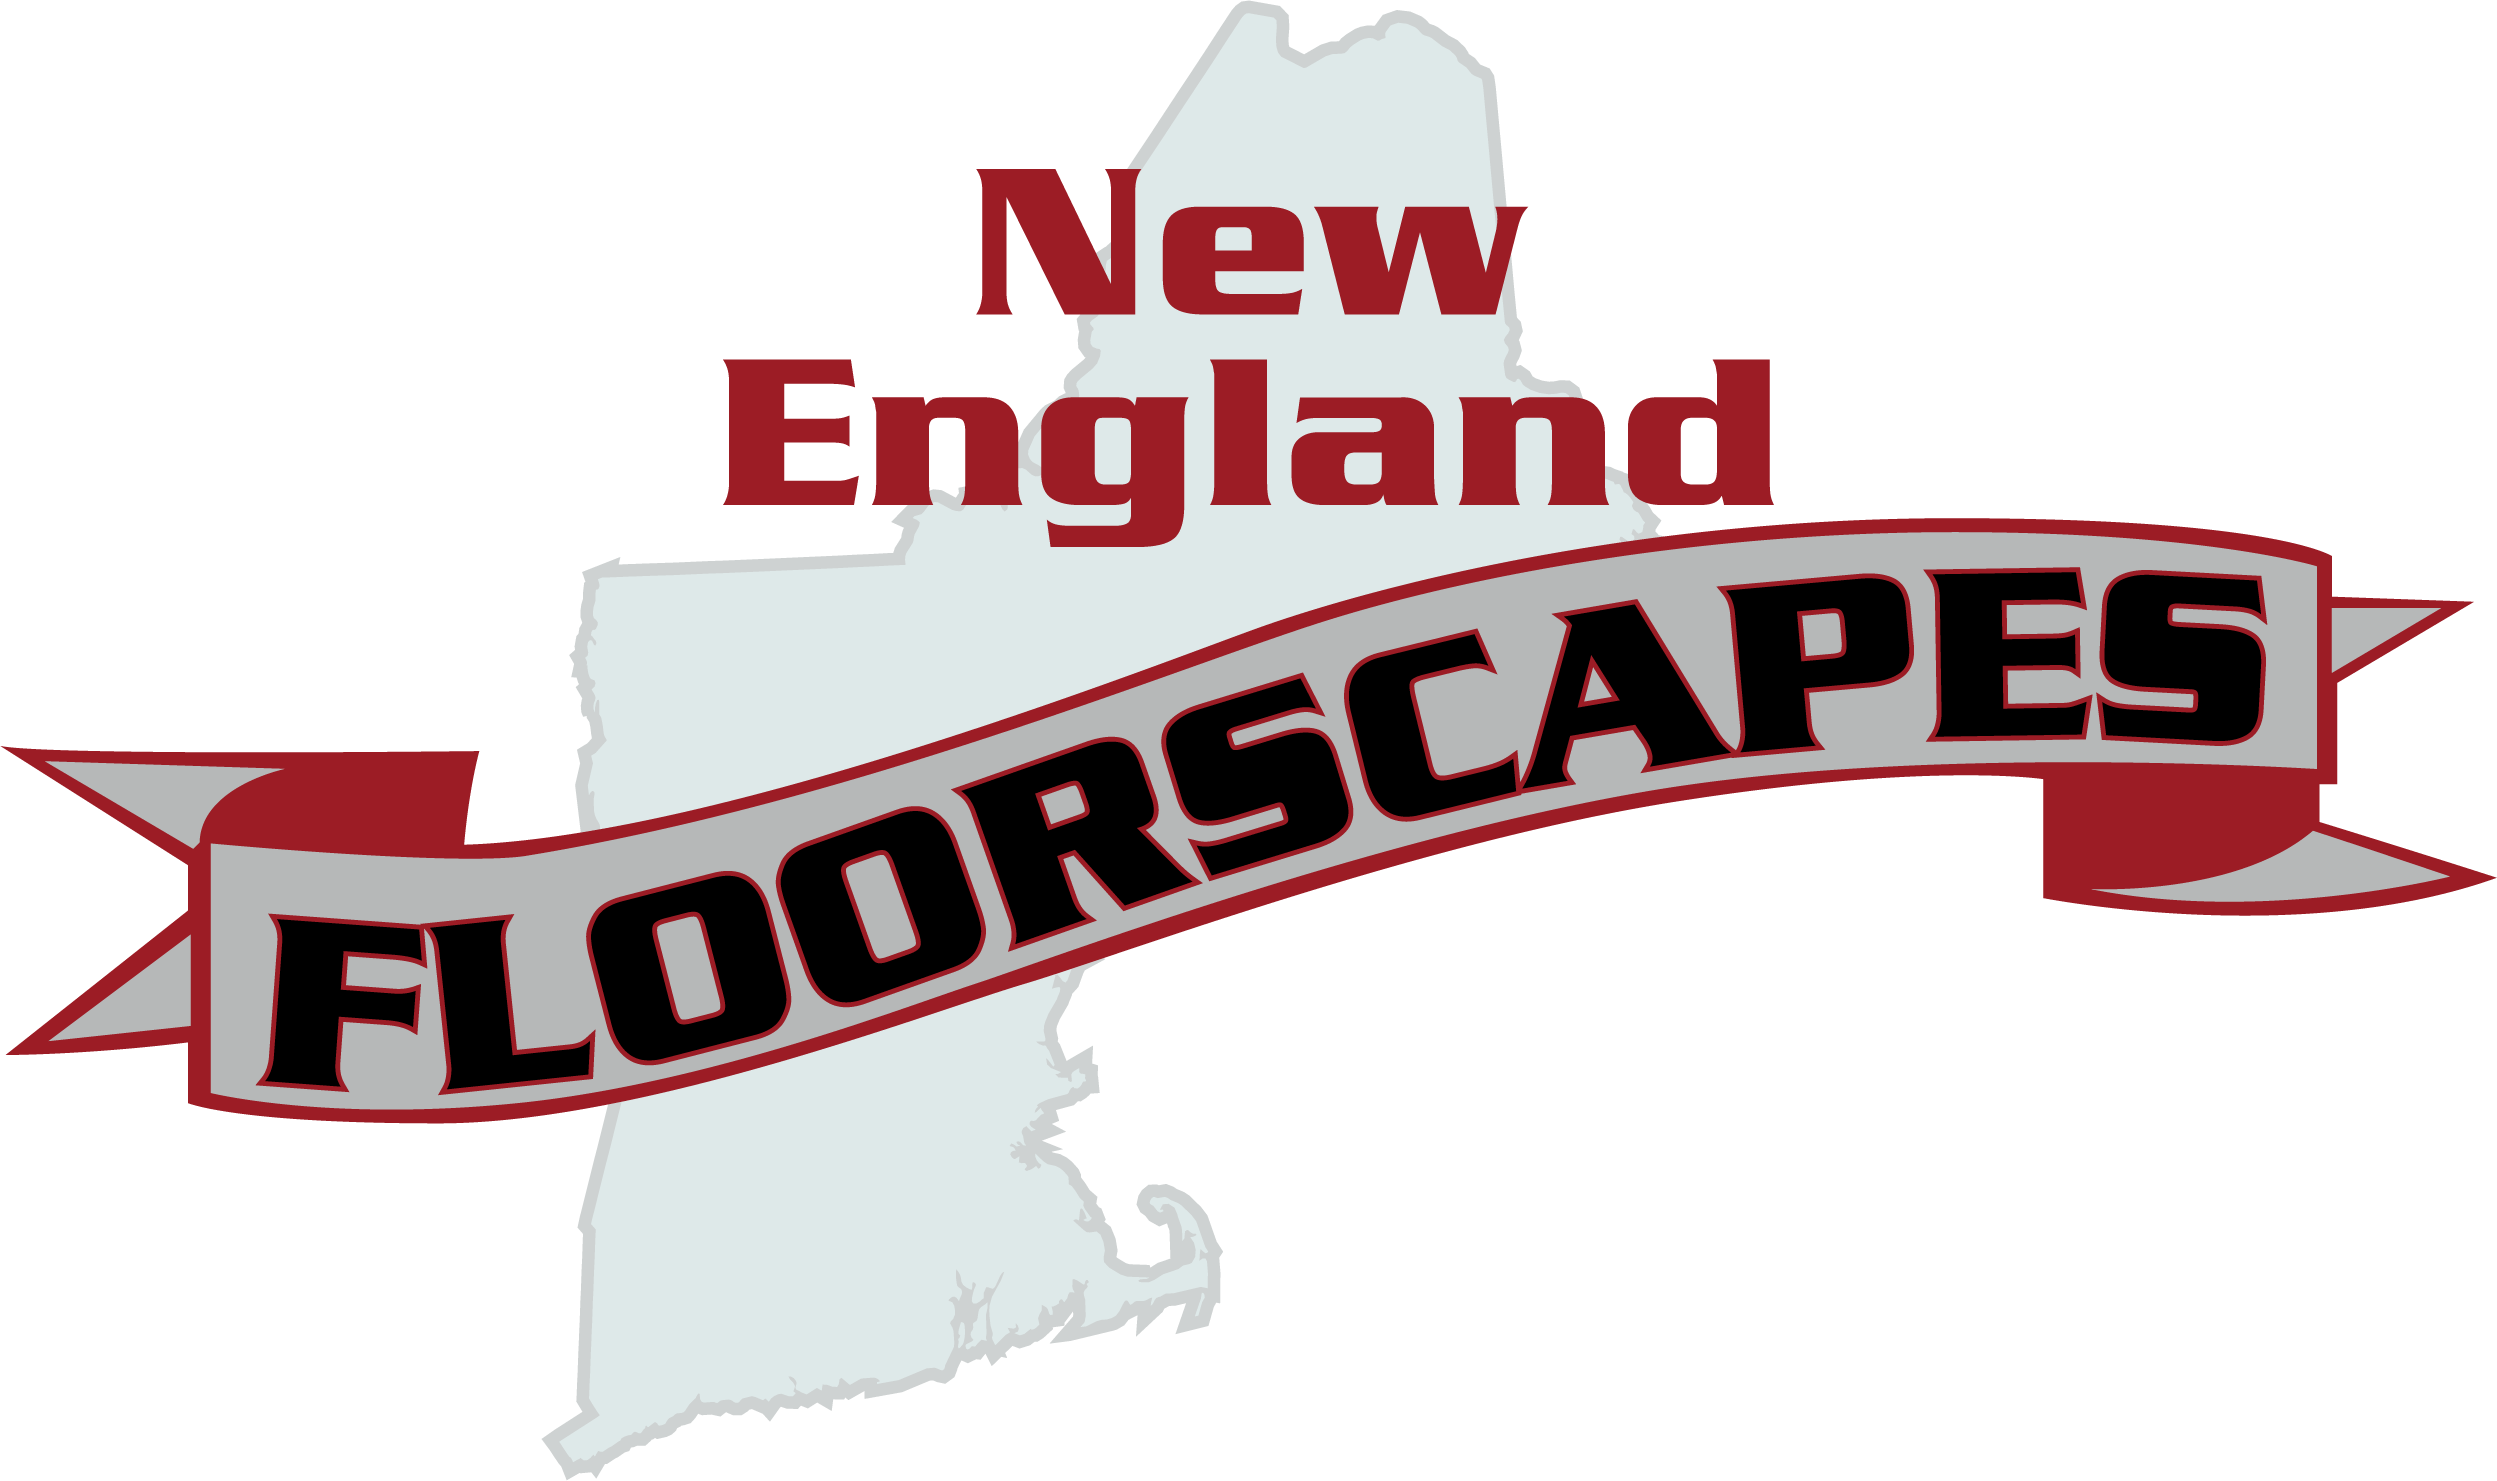 New England Floorscapes, Inc. Logo